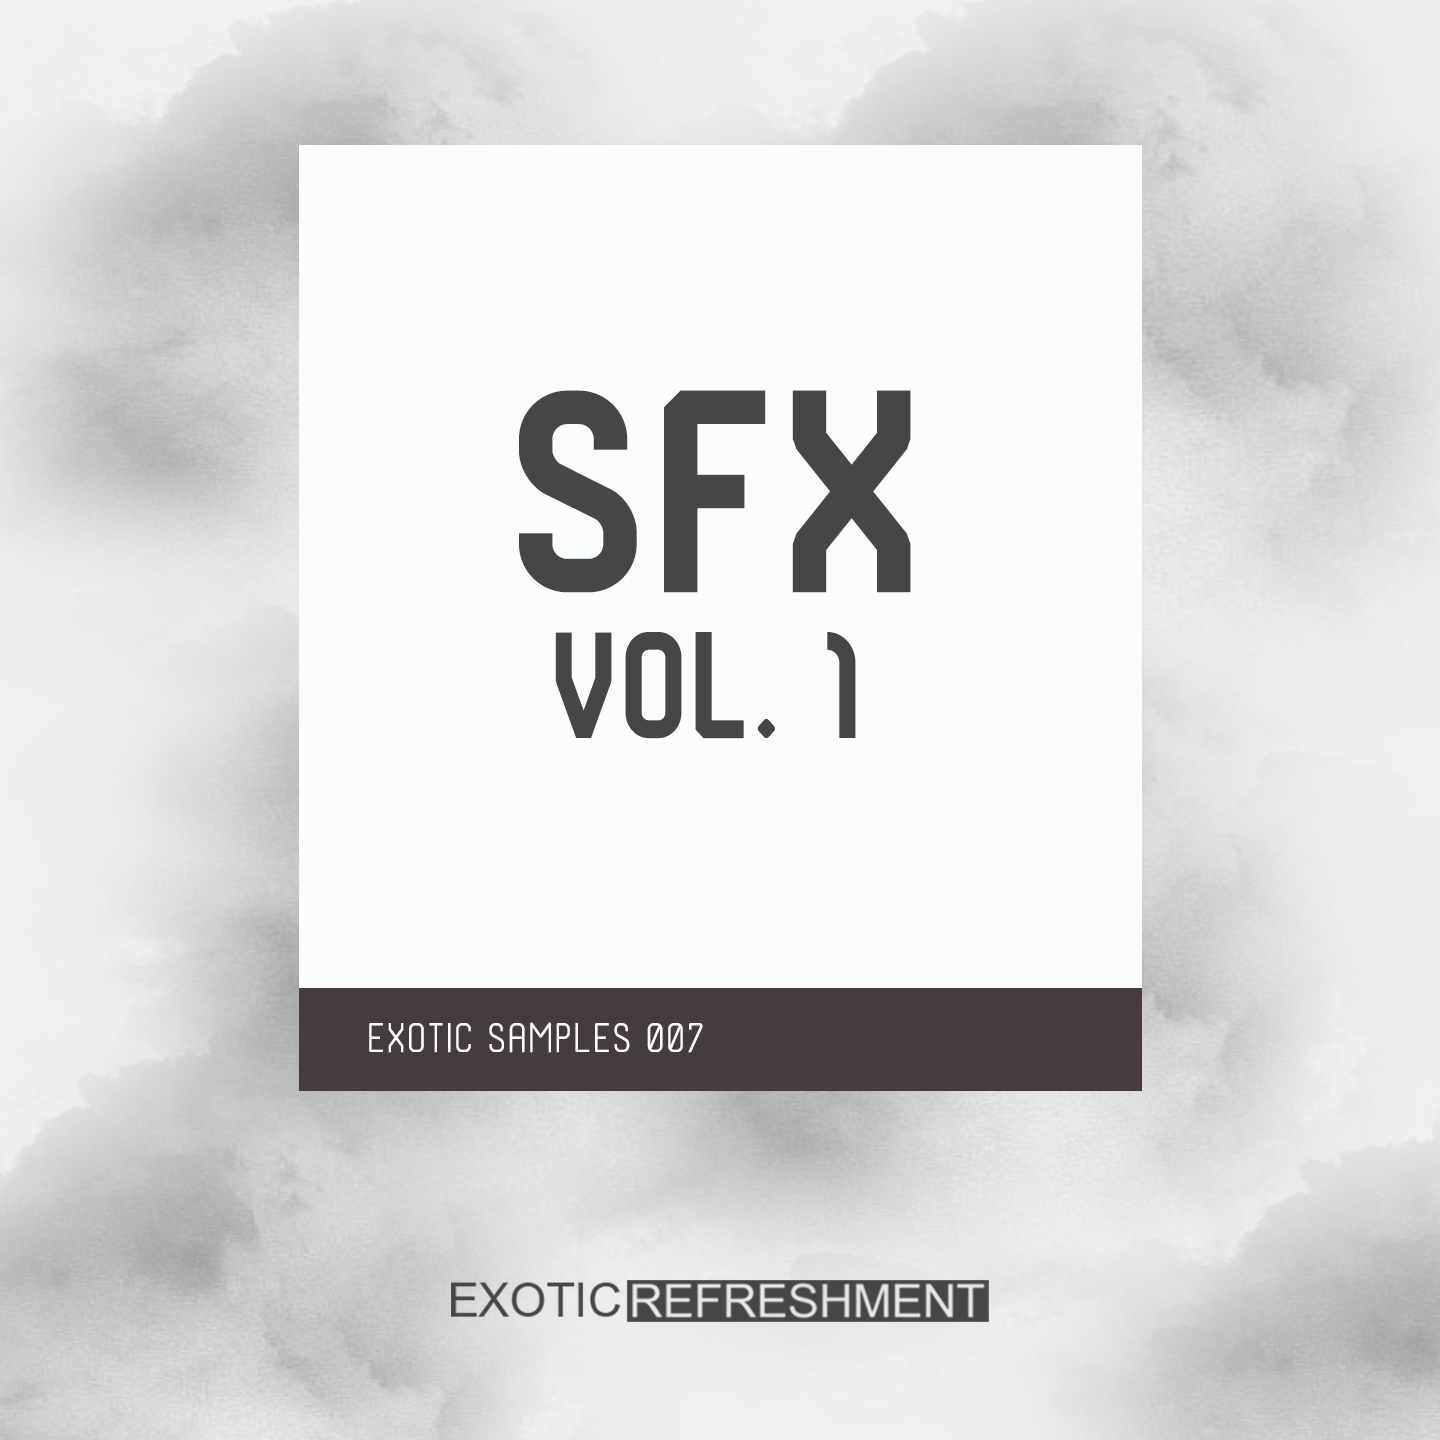 Sfx vol. 1 - Exotic Samples 007